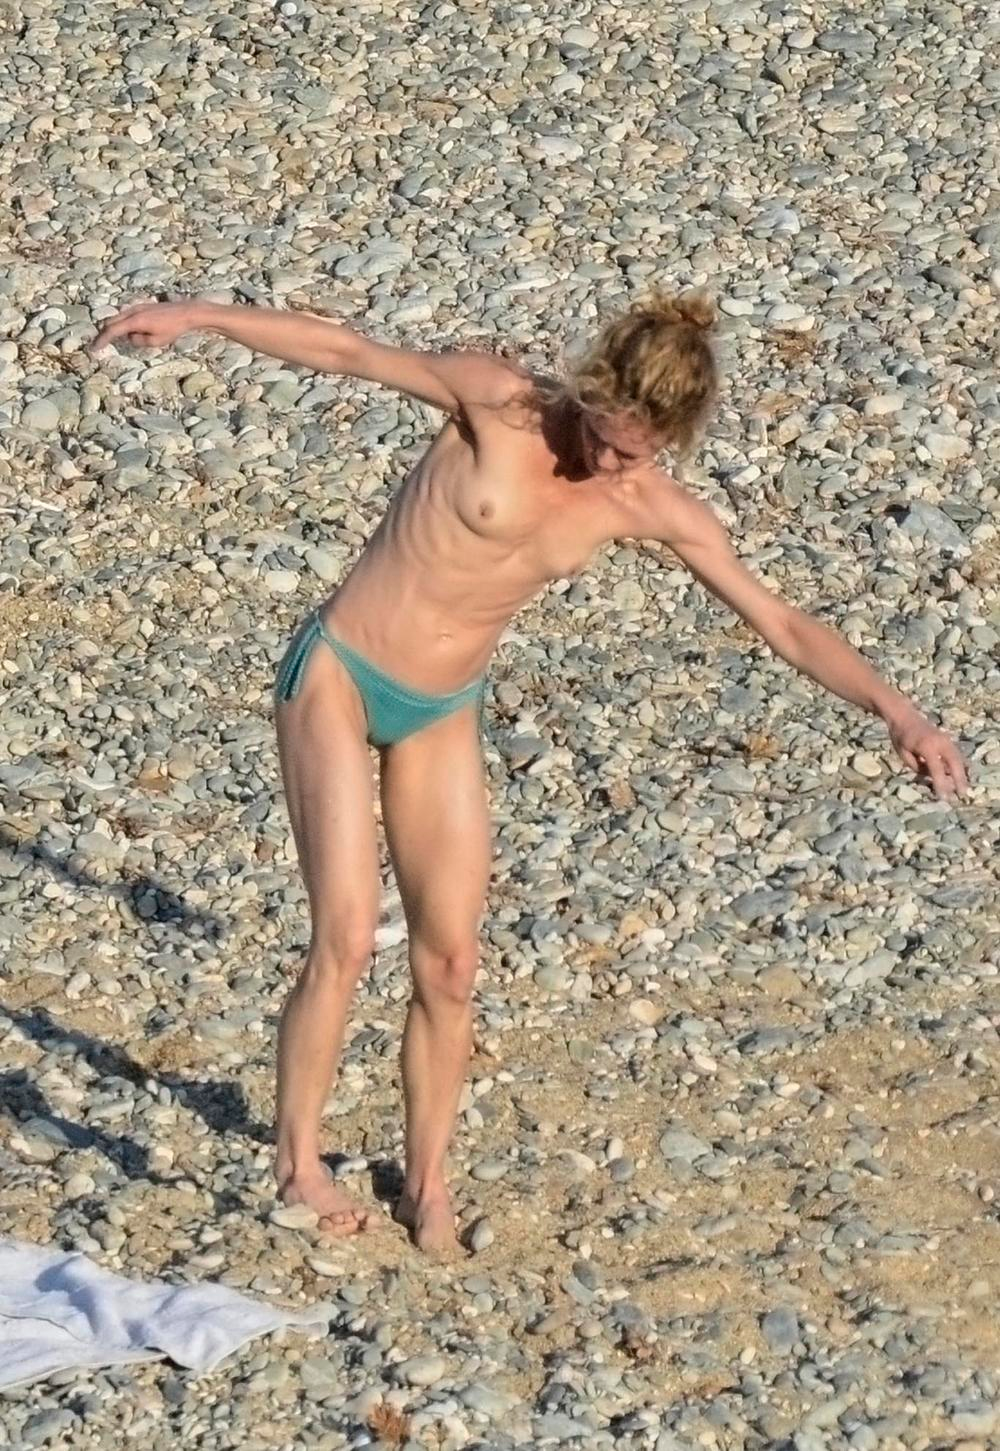 Topless pics of Vanessa Paradis